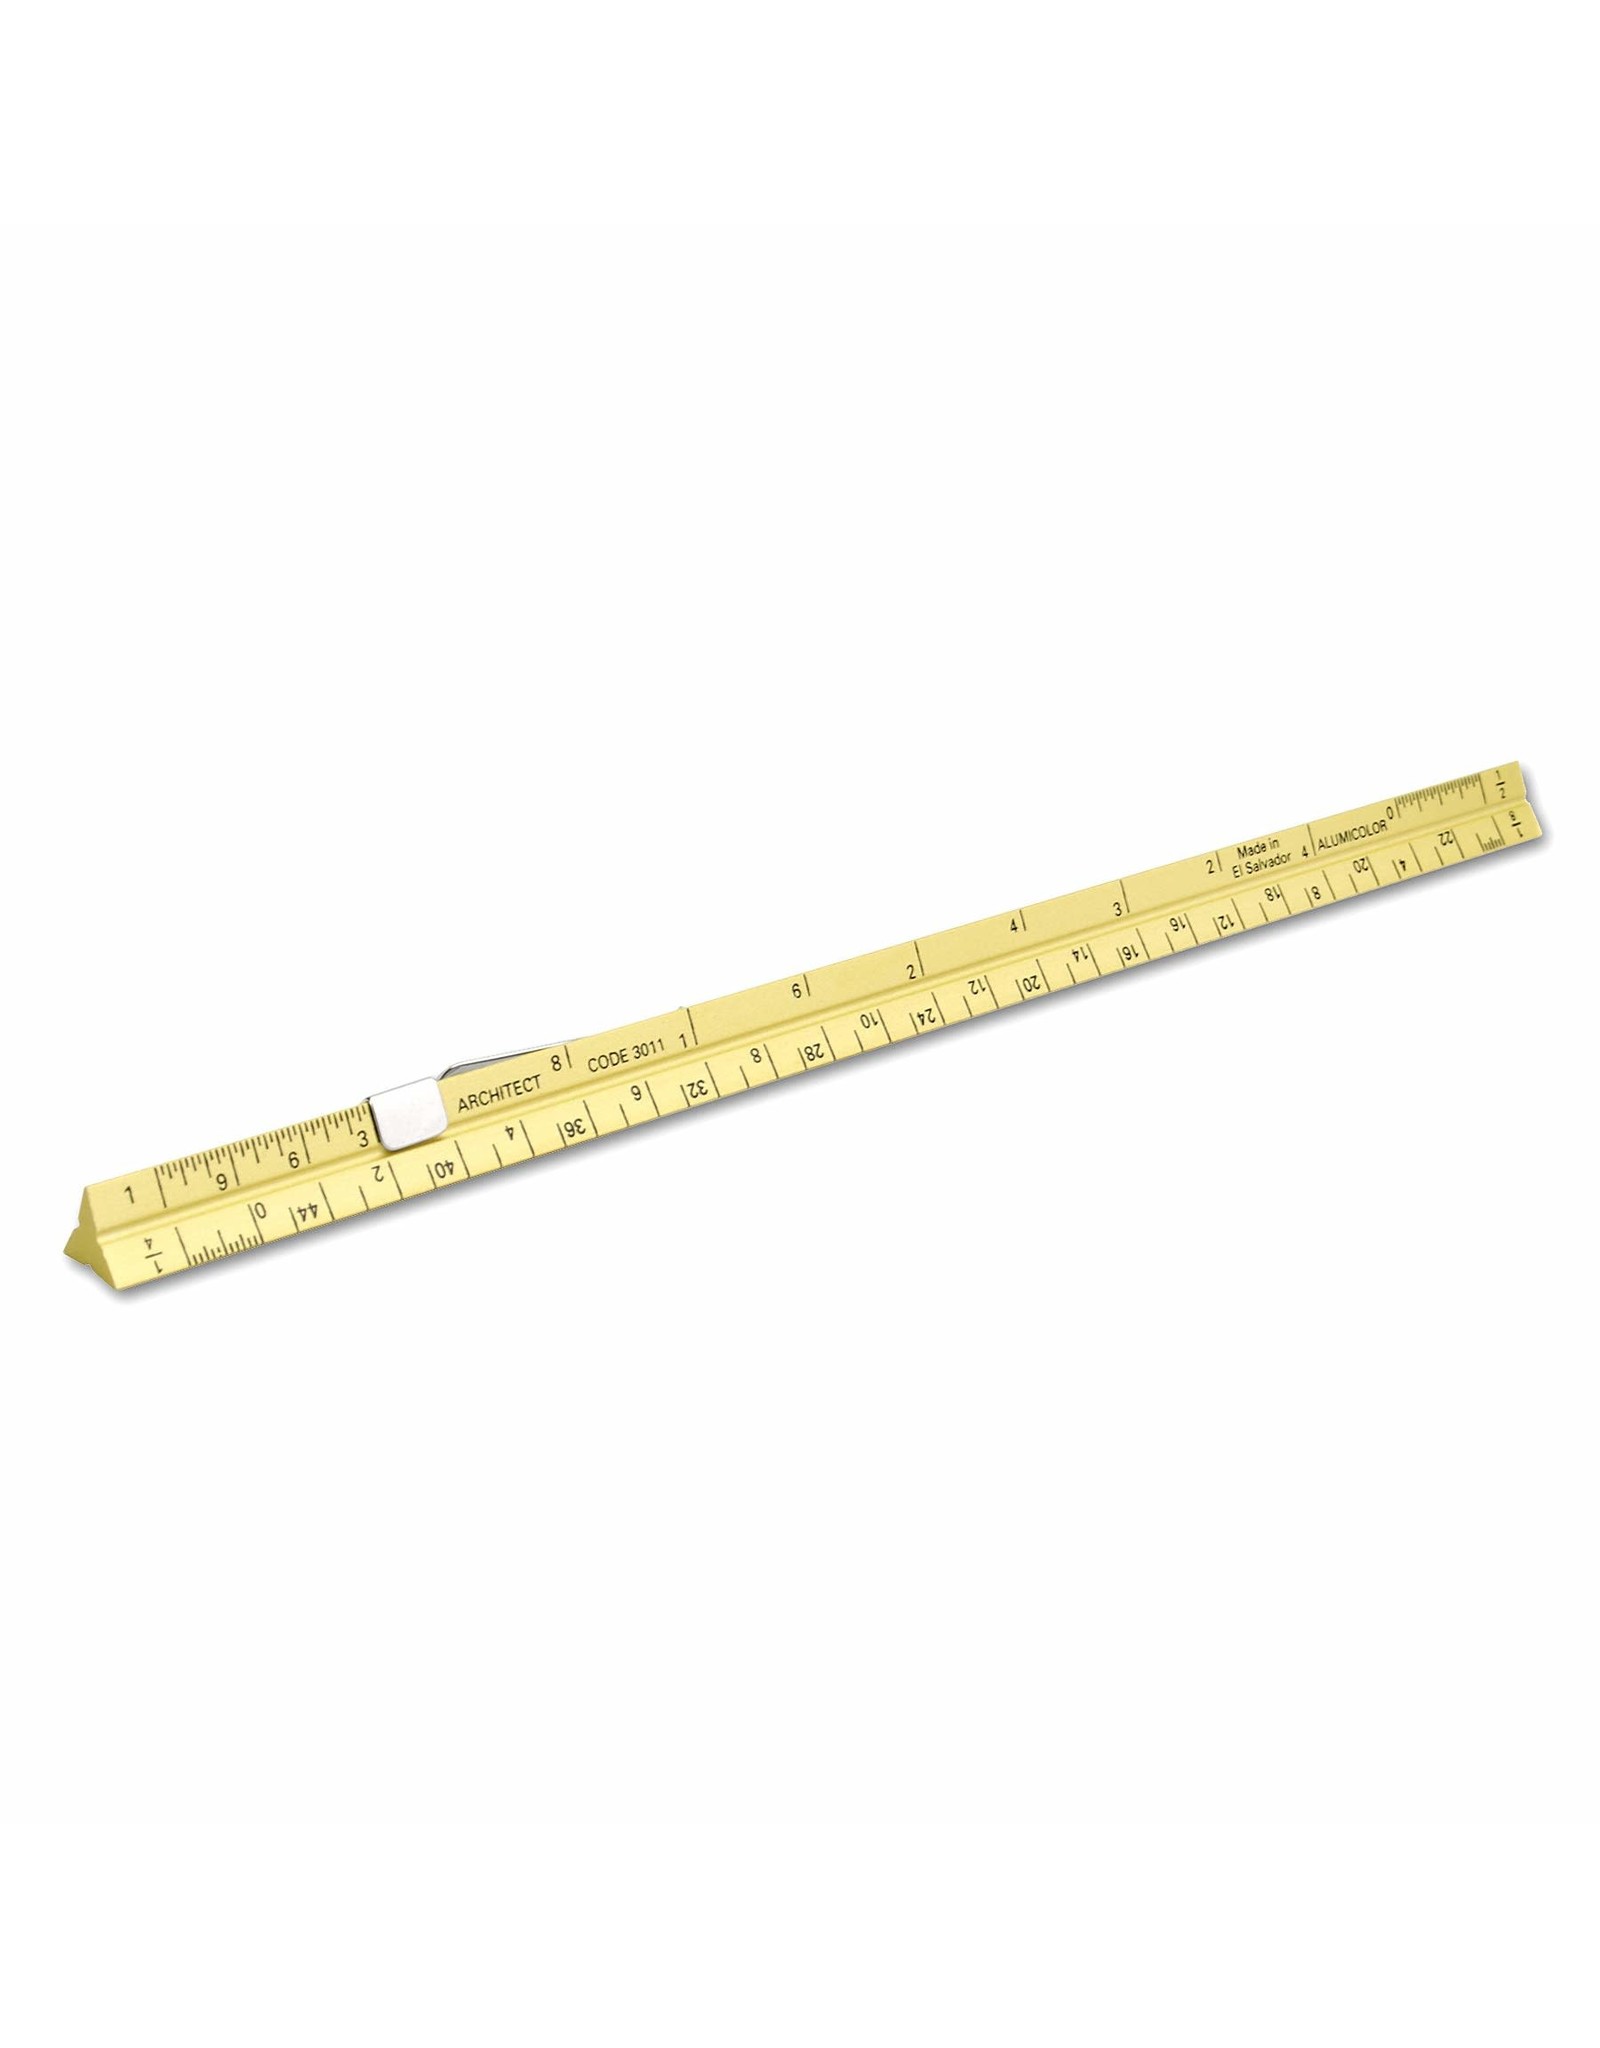 ALUMICOLOR Alumicolor Pocket Engineer Scale with Pocket Clip, 6”